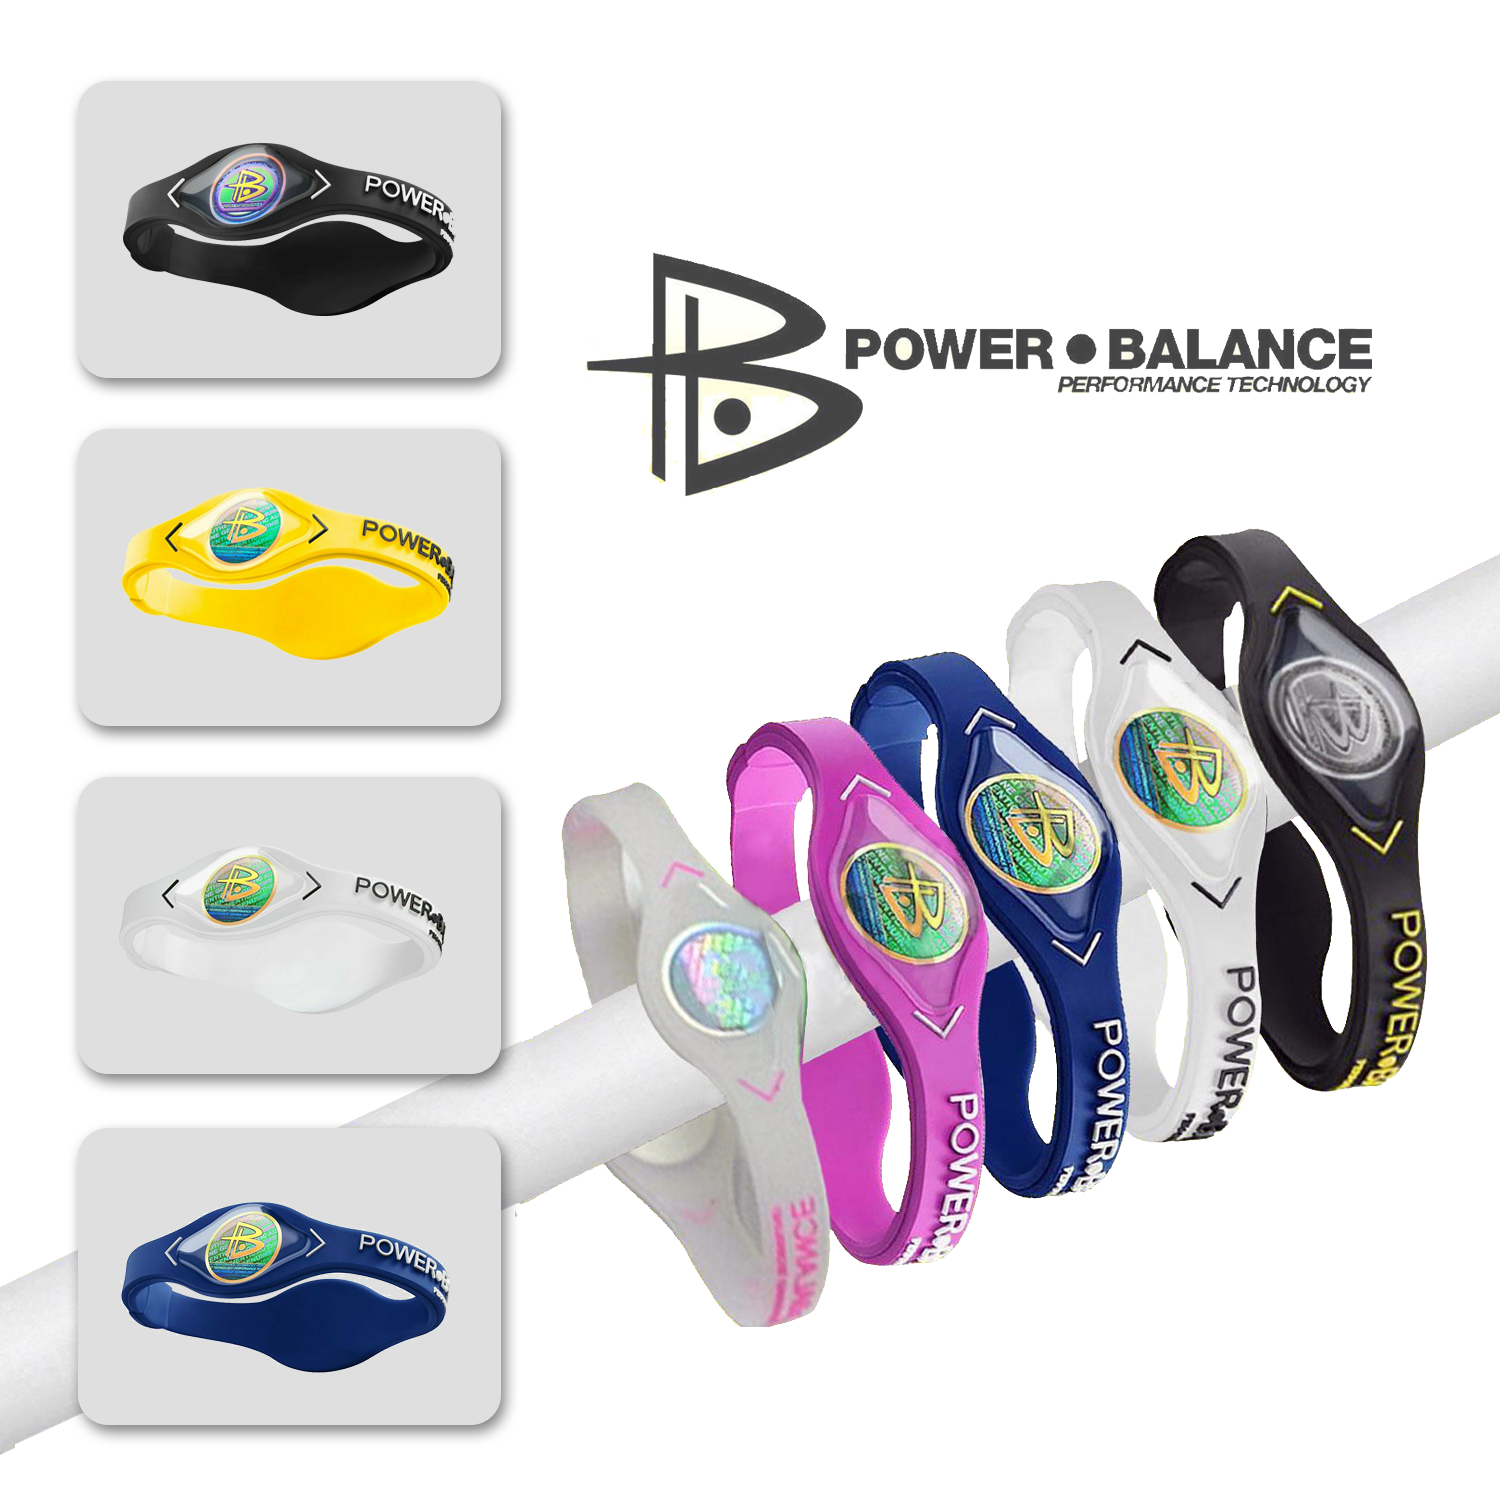 Power Balance Bracelet Hologram Silicone Original Strength And Flexibility Power Balance Does Not Apply